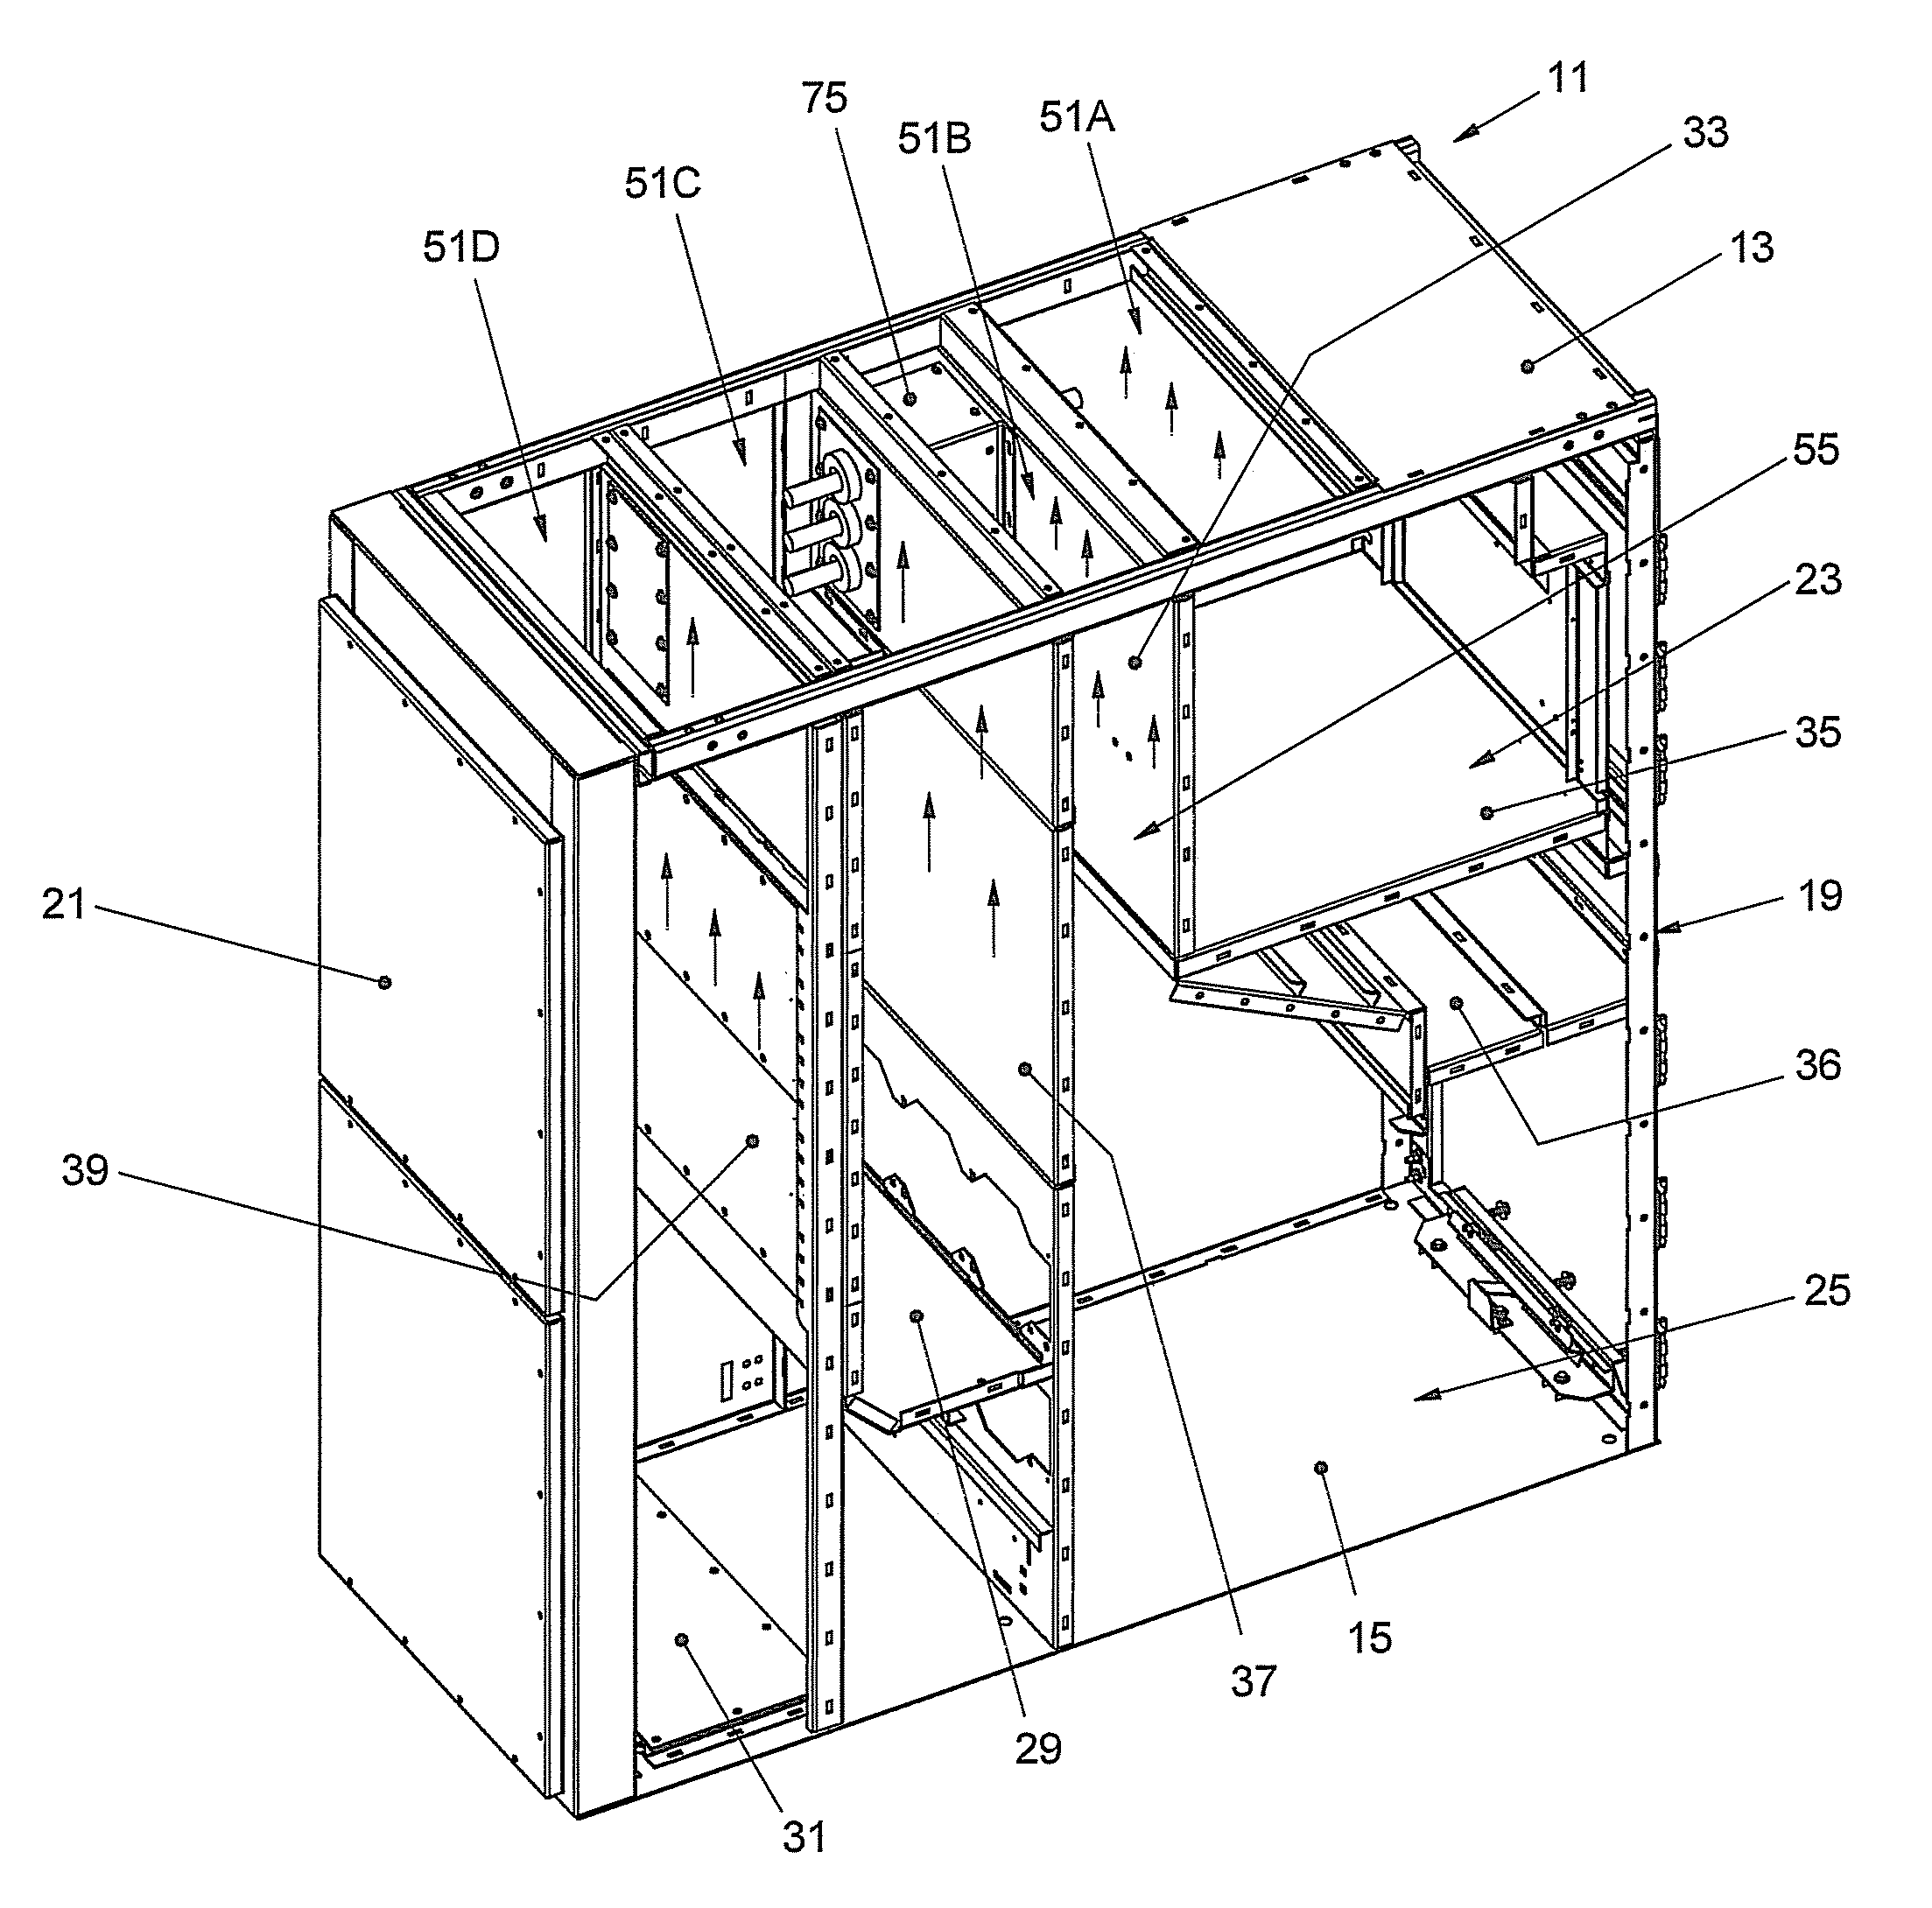 Arc-resistant switchgear enclosure with vent arrangement of a lower compartment